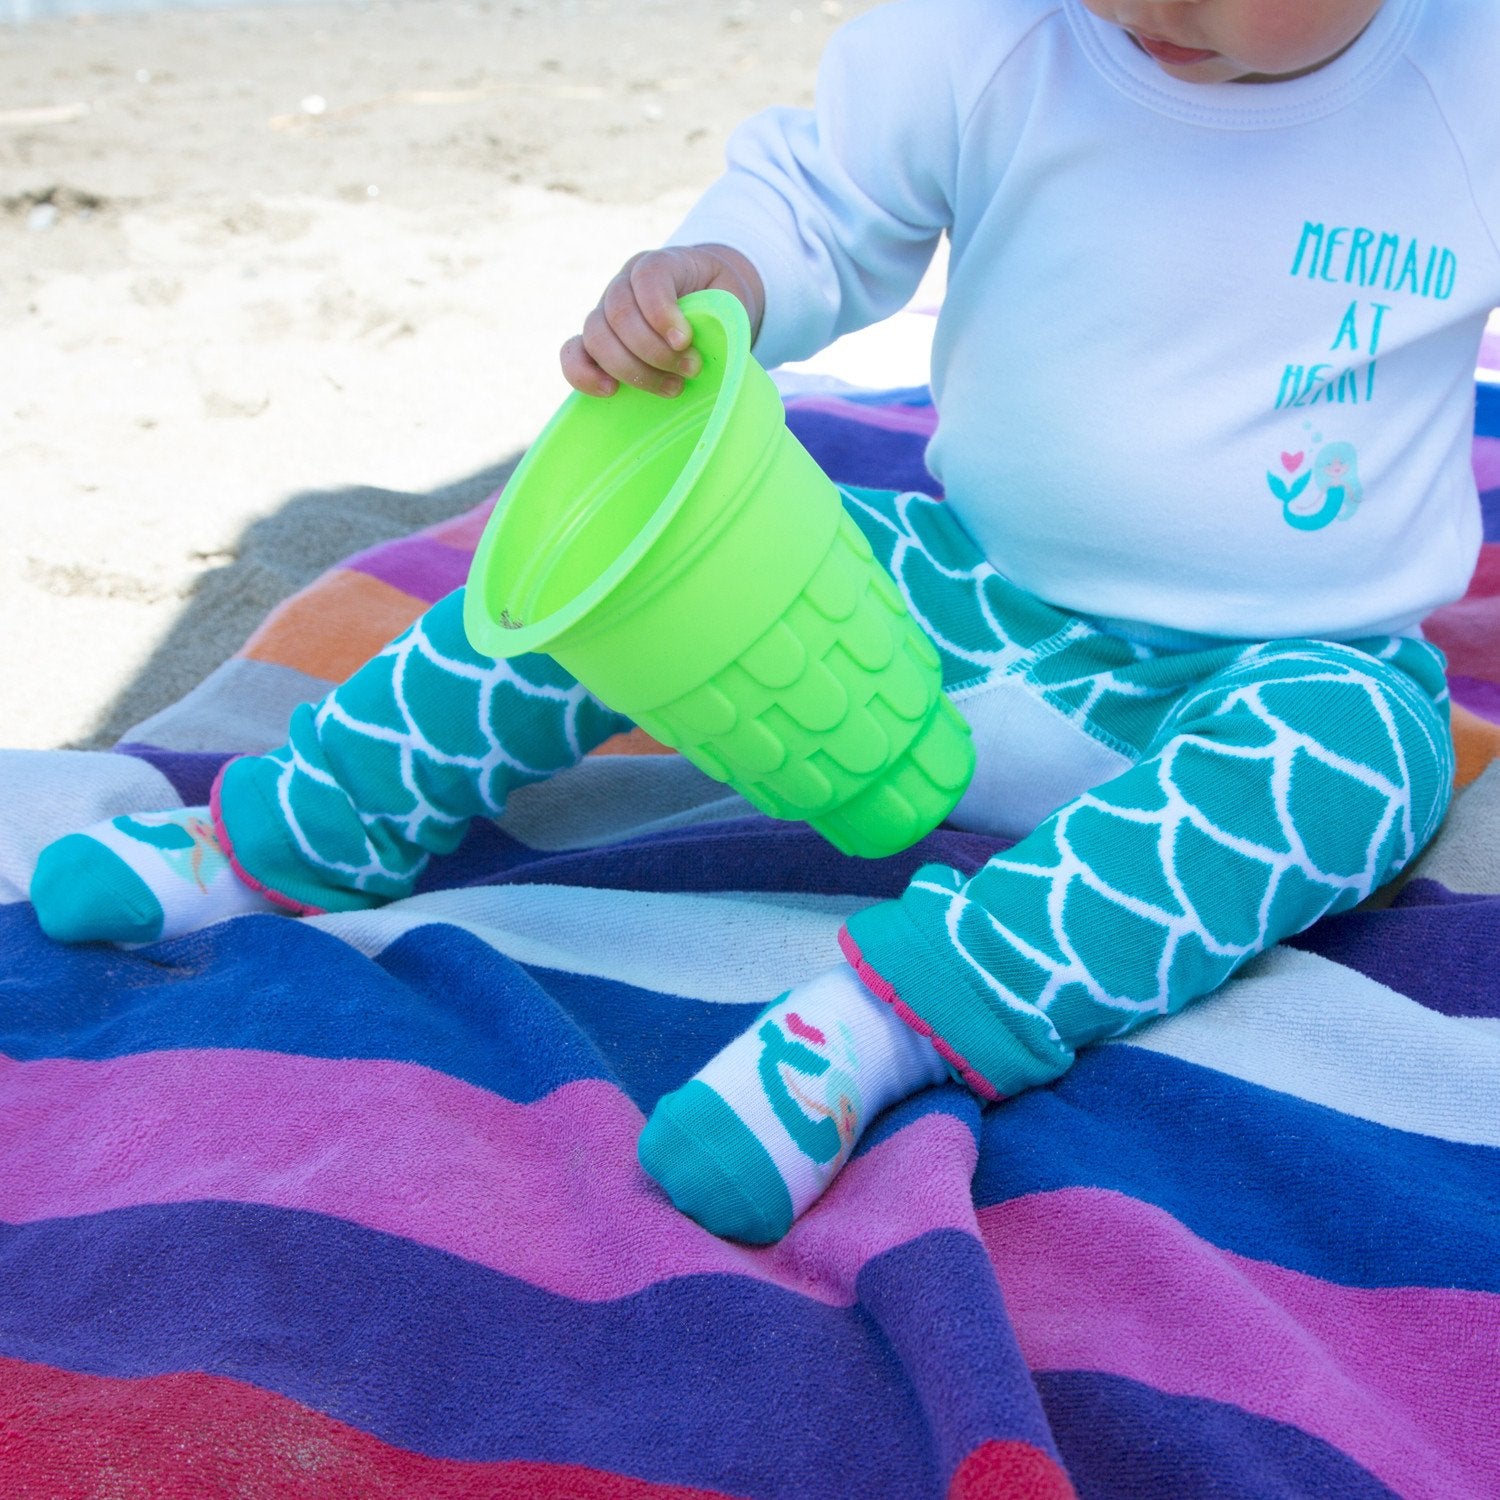 White and Aqua Seafoam Mermaid Baby Socks Baby Socks Izzy & Owie - GigglesGear.com